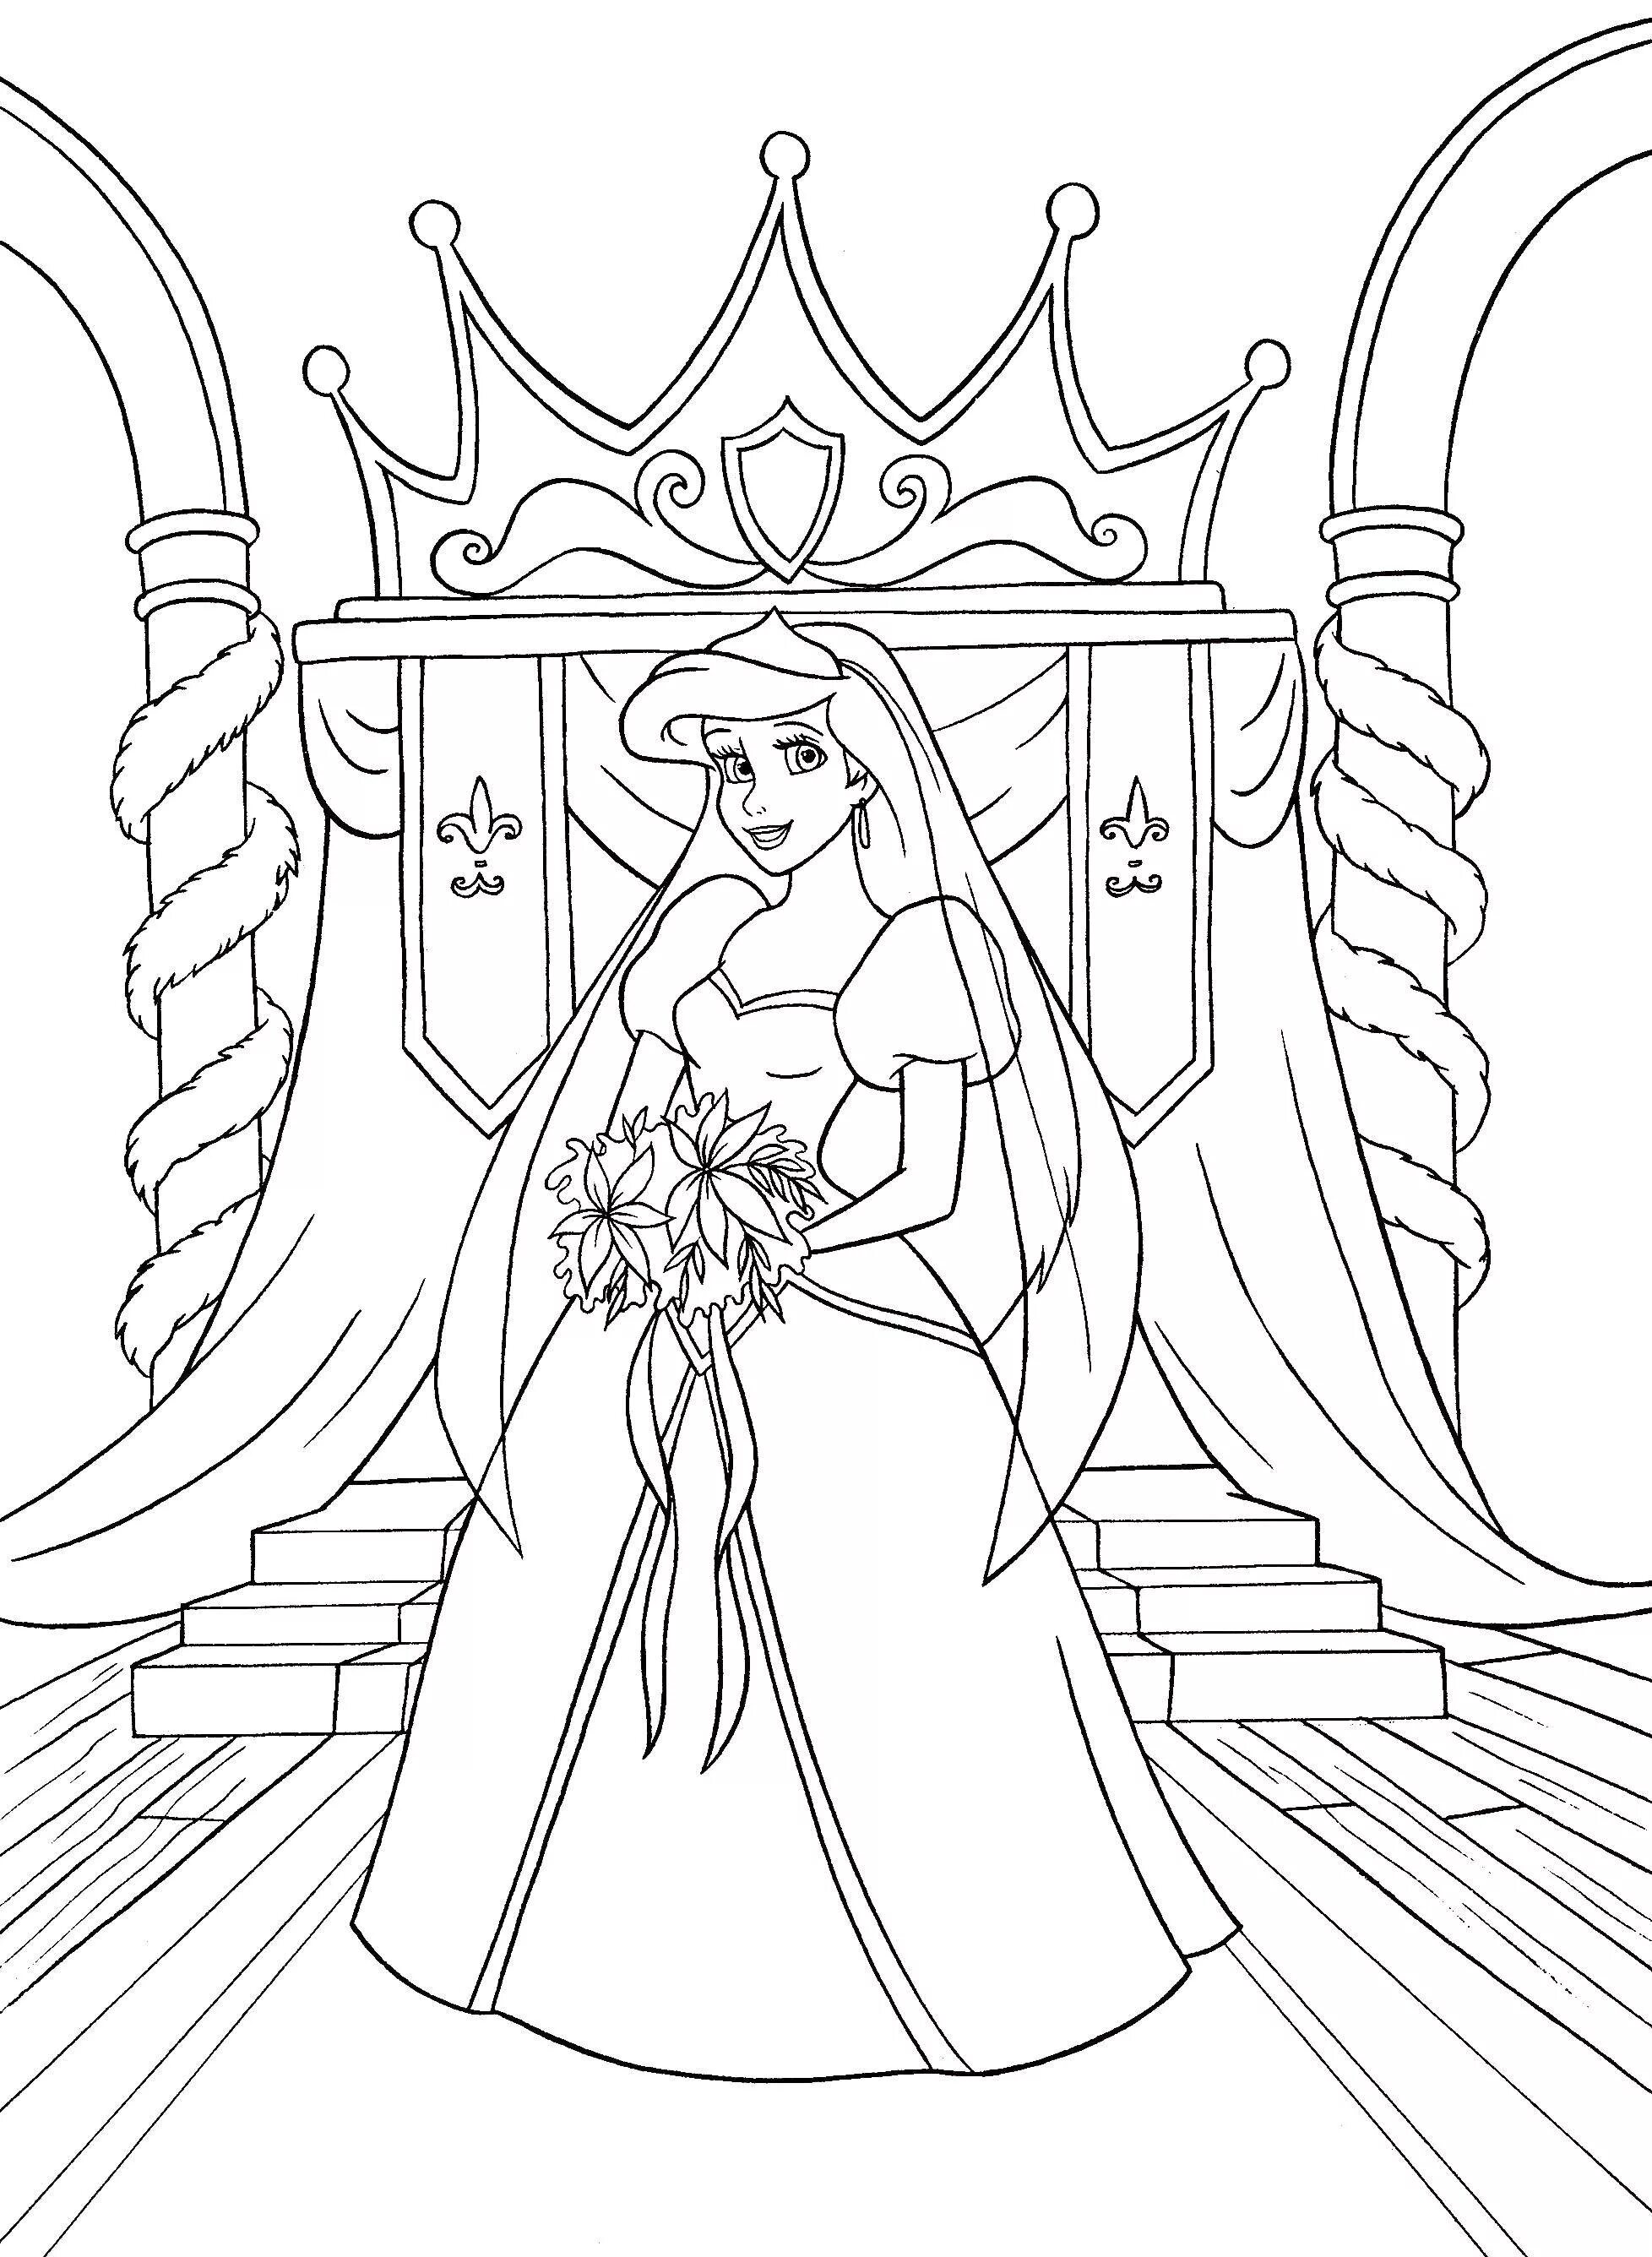 Gorgeous princess coloring page